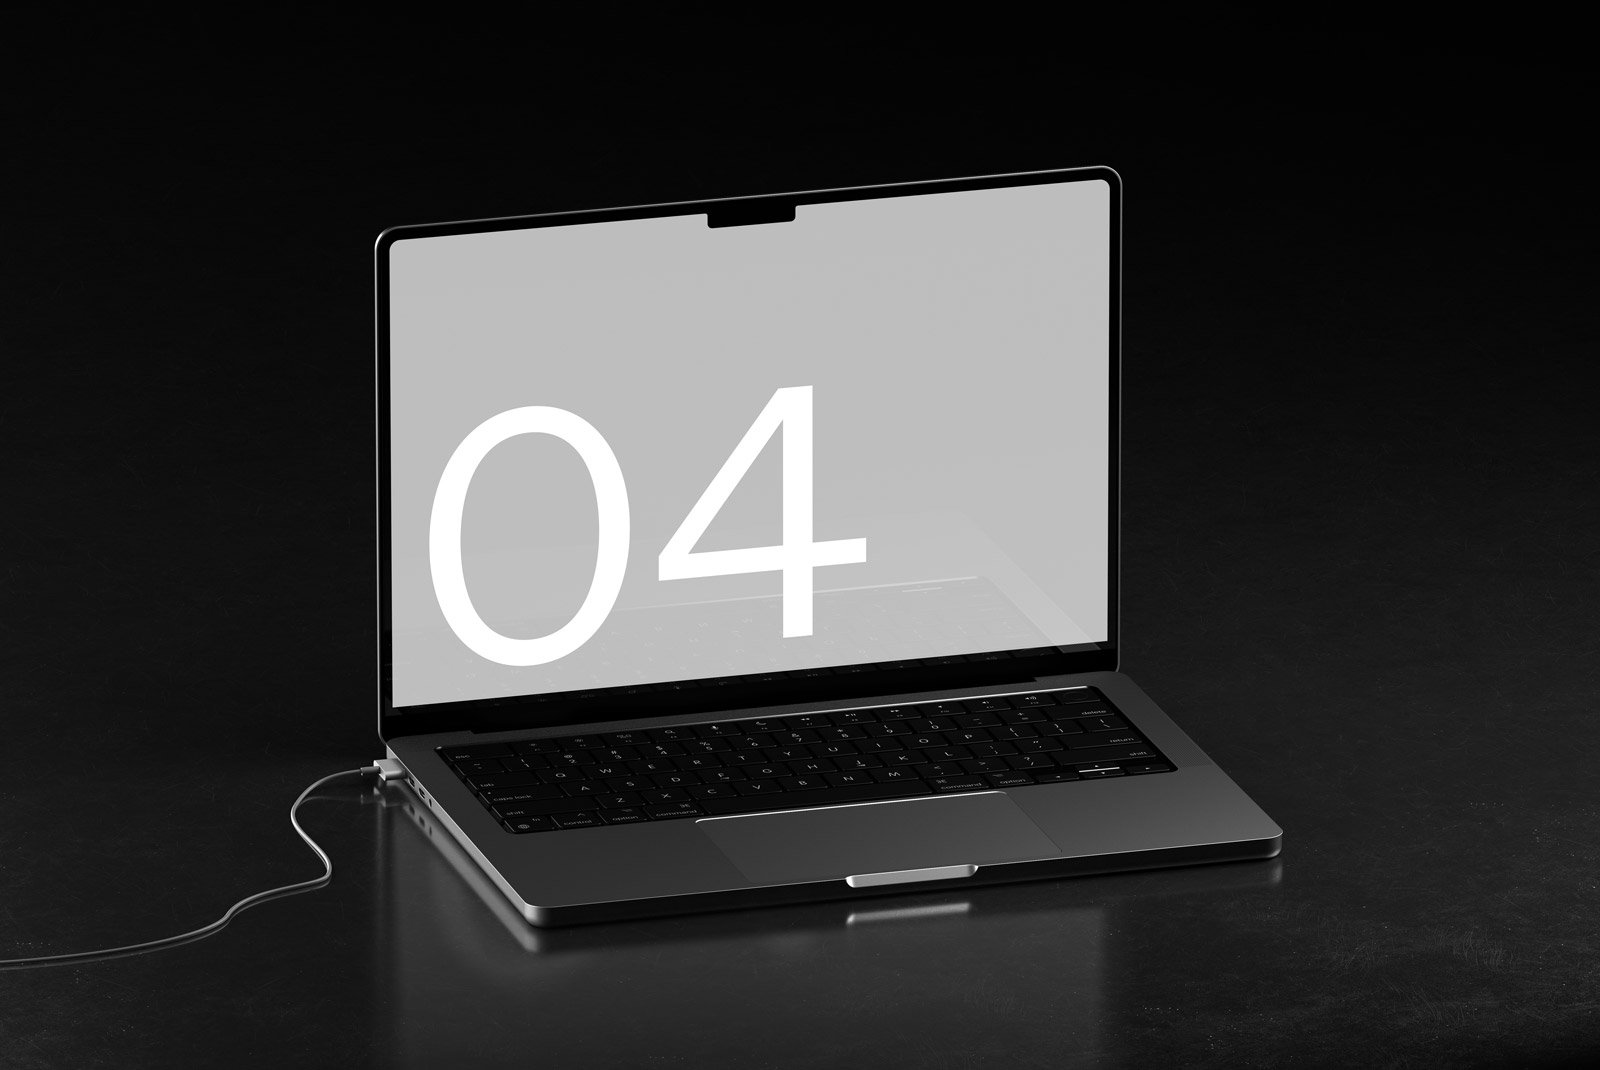 MacBook Pro 04 Standard Mockup preview image.